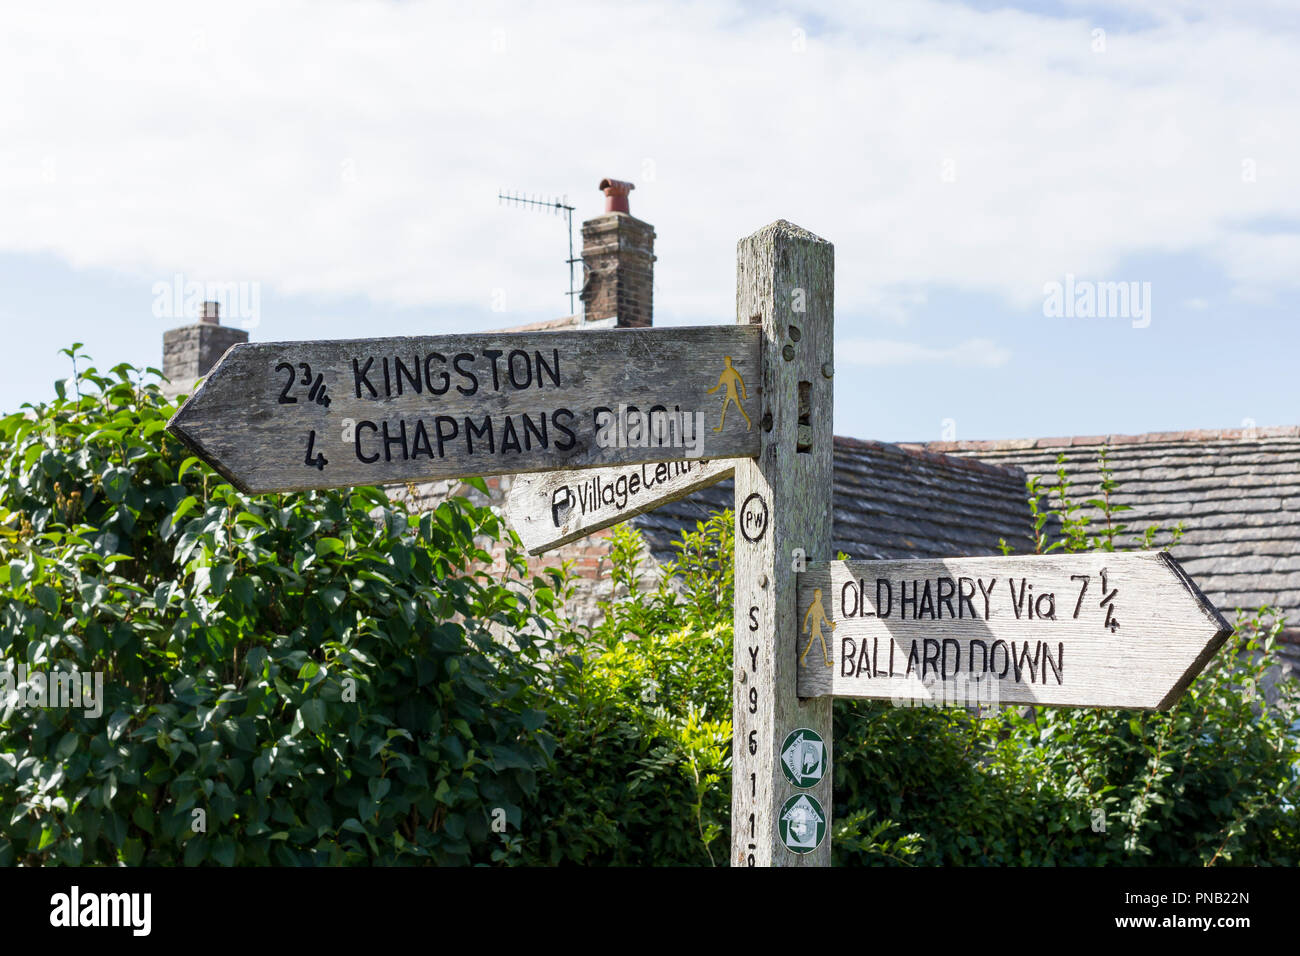 Signpost at Corfe Castle village for Kingson, Chapmans Pool, Old Harry, Ballard Down, Dorset, UK Stock Photo